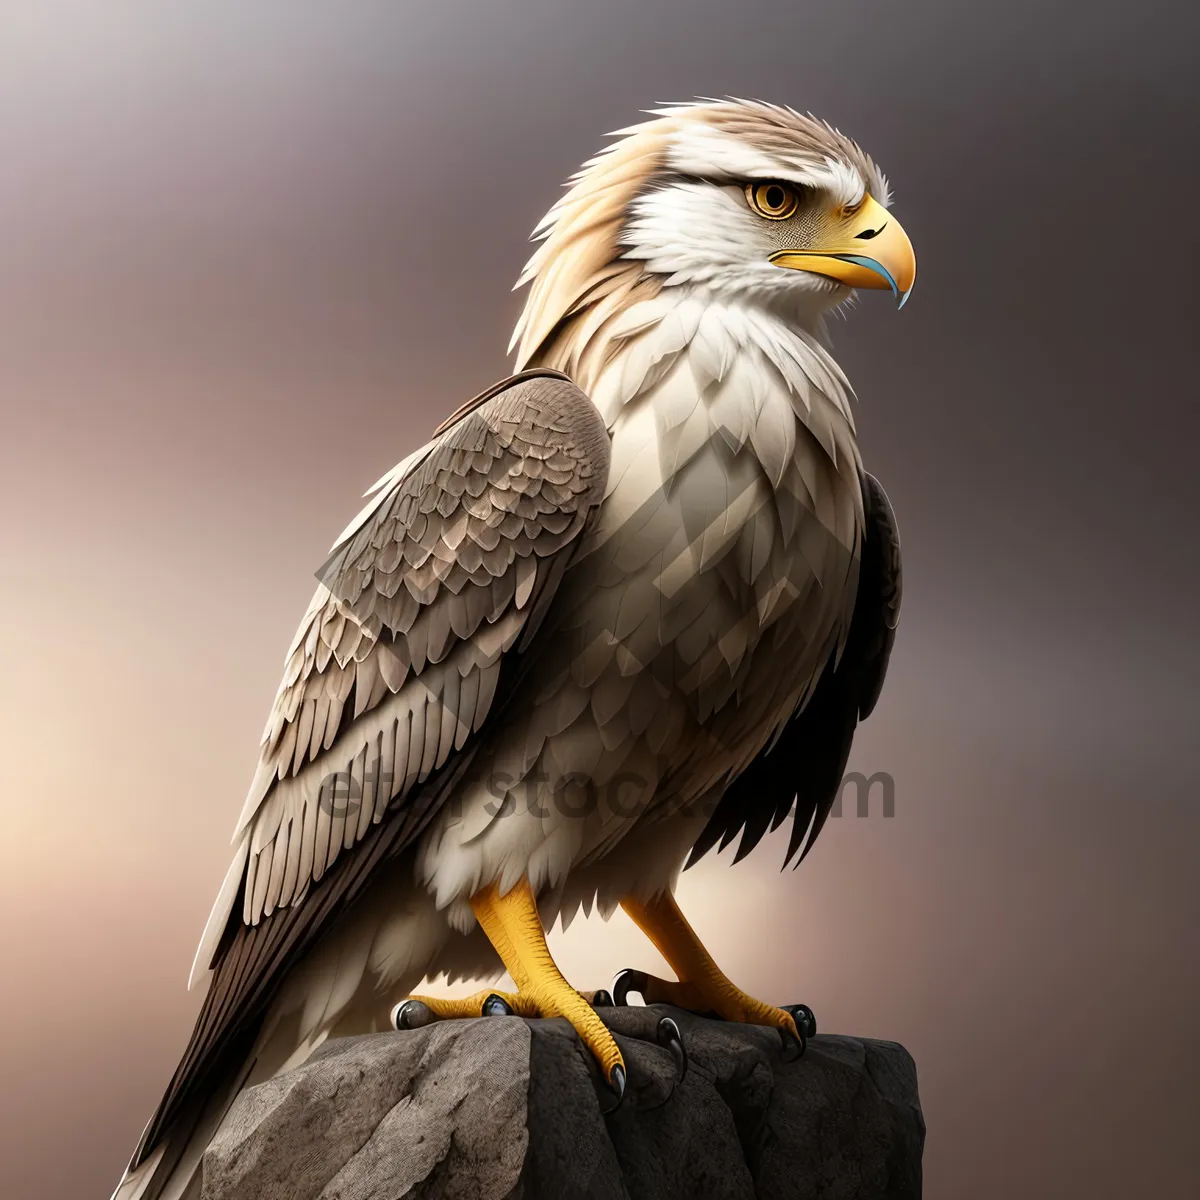 Picture of Bald Eagle in Flight, Majestic Predator Soaring